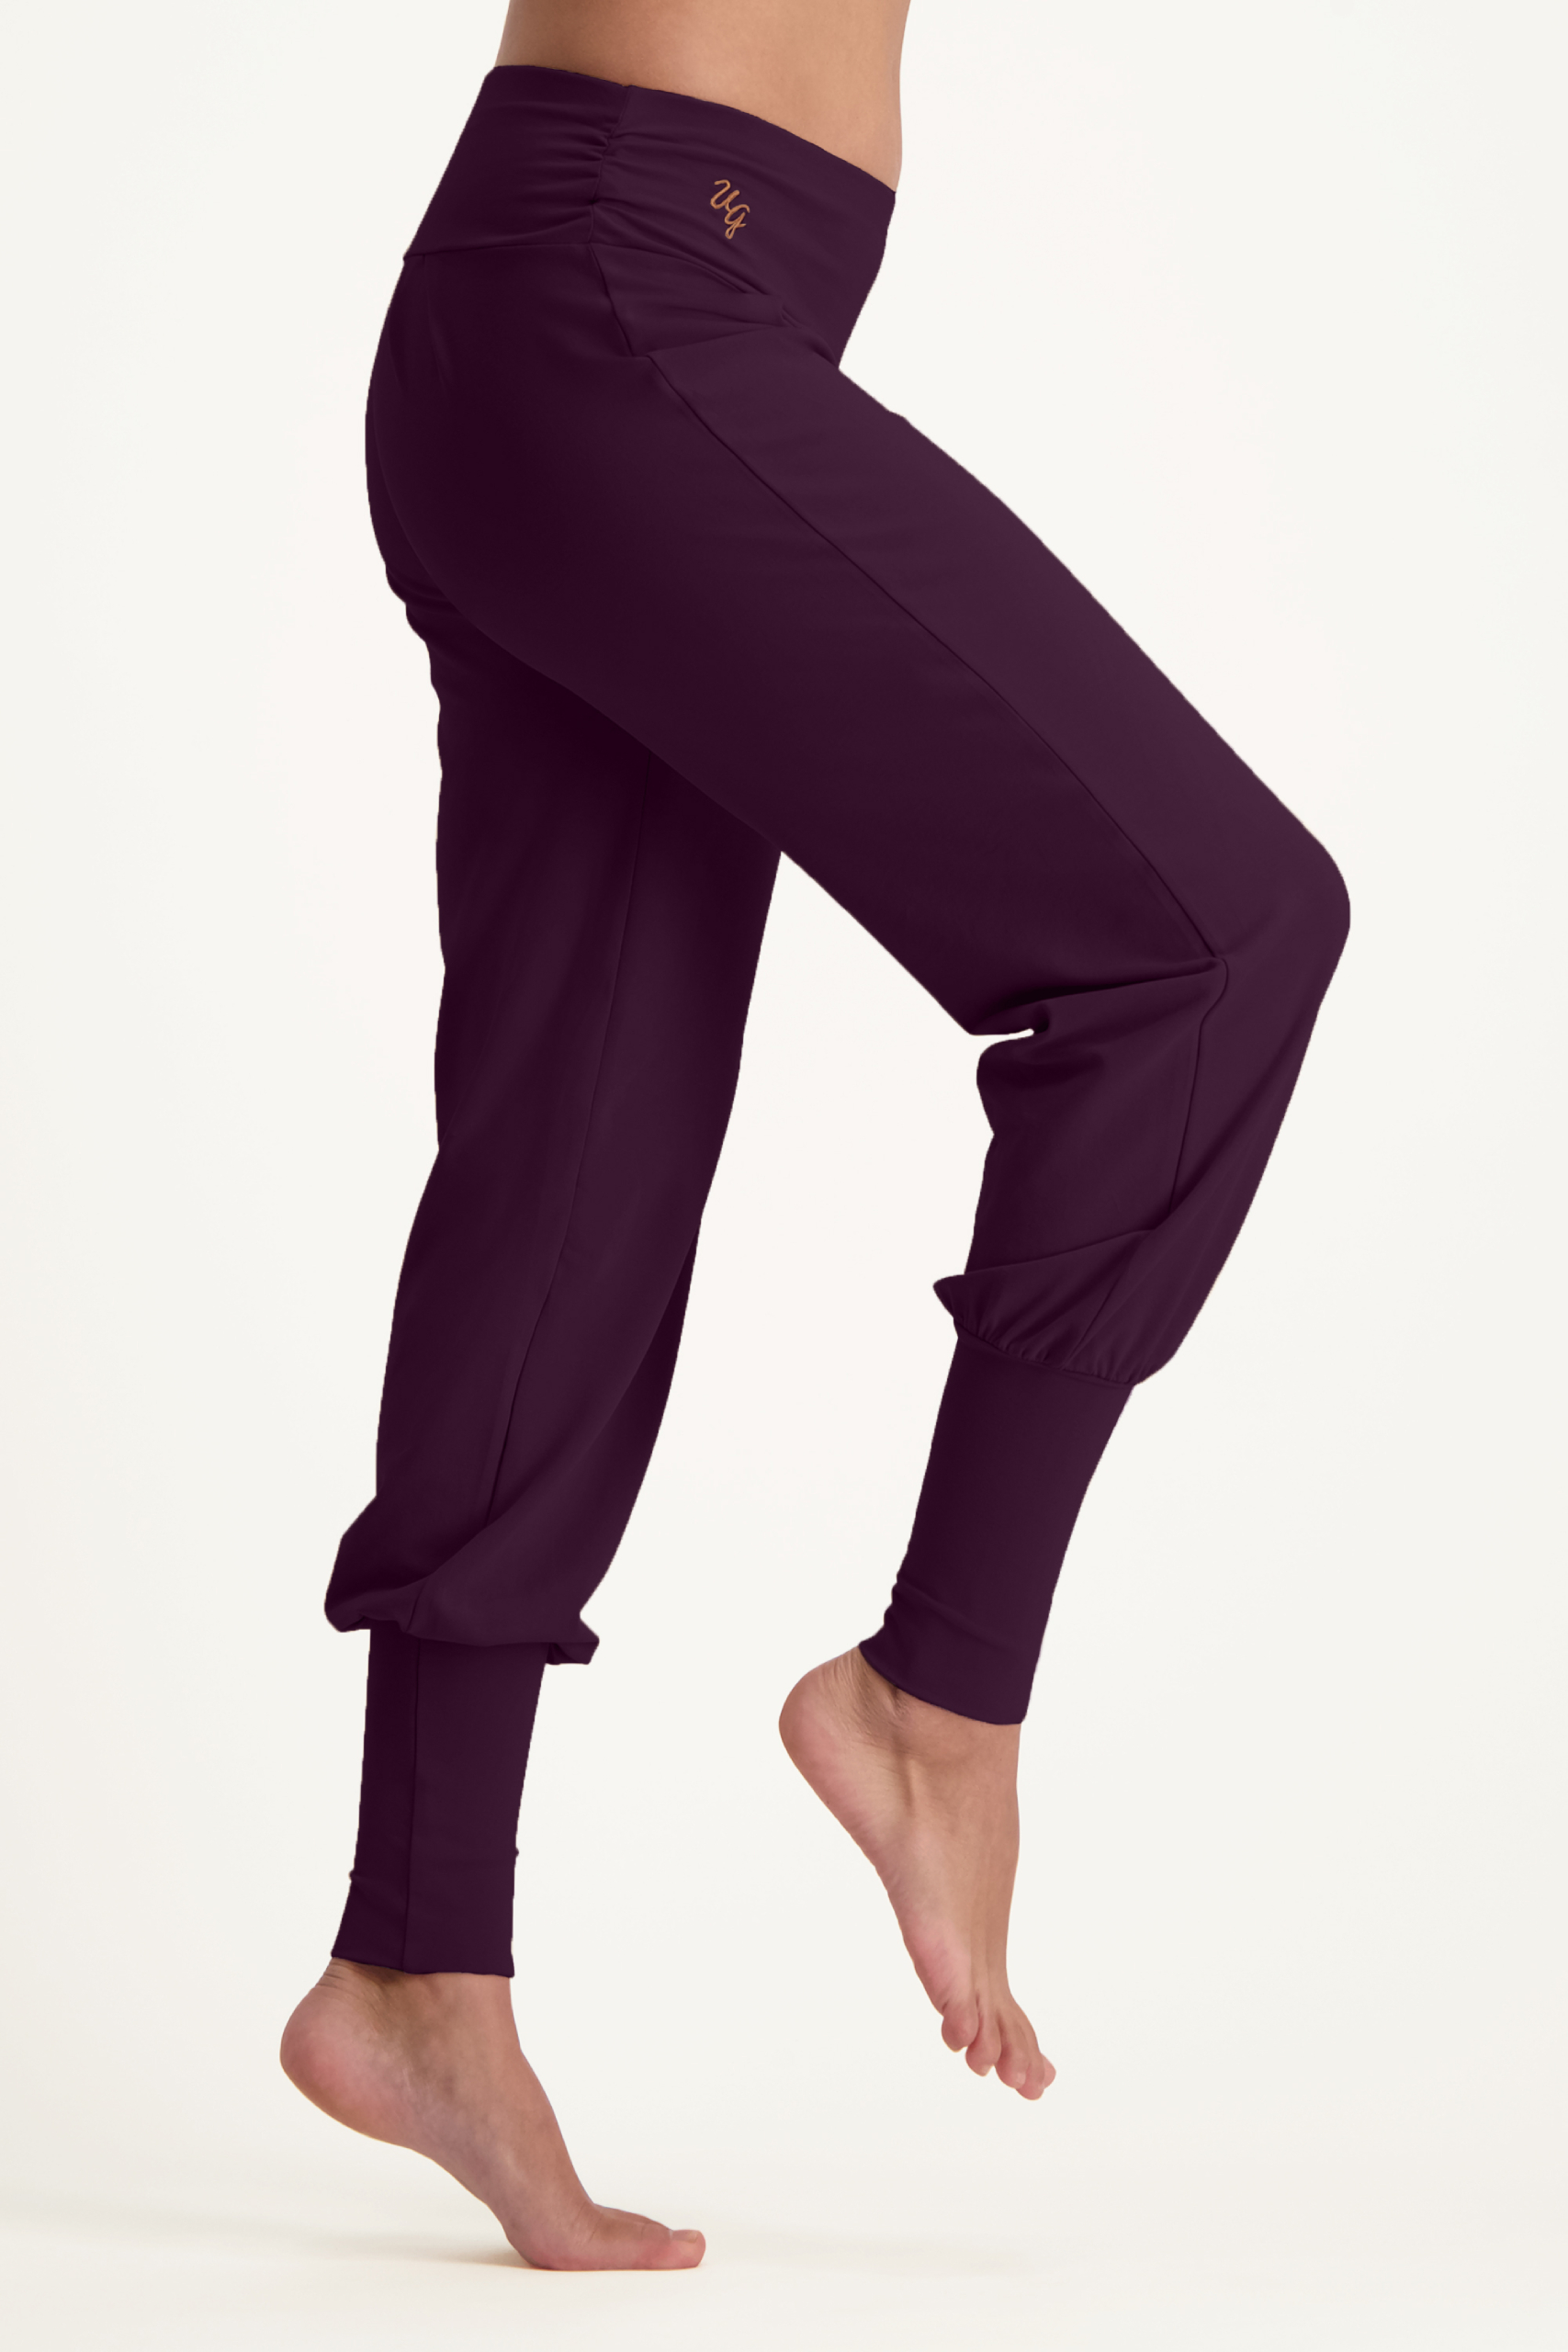 Black Joggers Yoga Pants Drop Crotch Pants Loose Pants - Etsy | Drop crotch  pants, Black joggers, Drop crotch